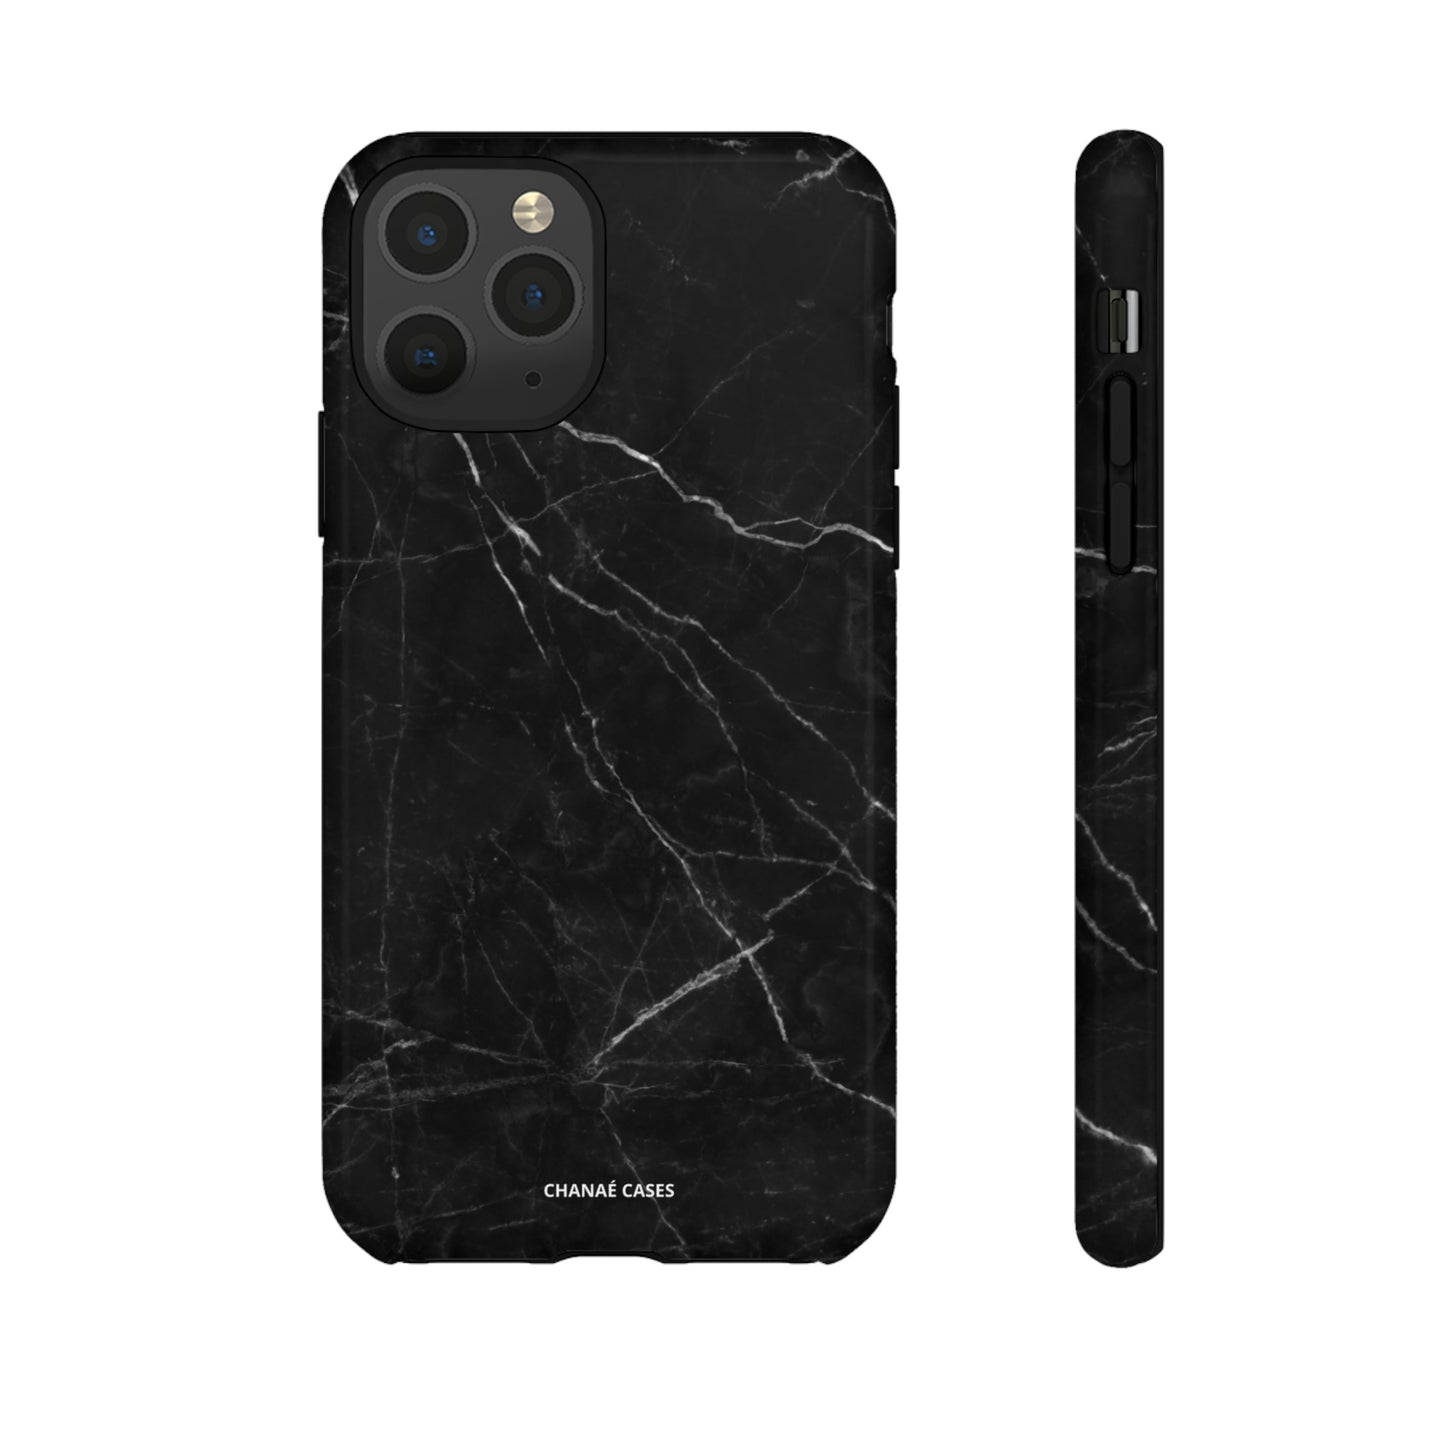 Titan Marble iPhone "Tough" Case (Black)